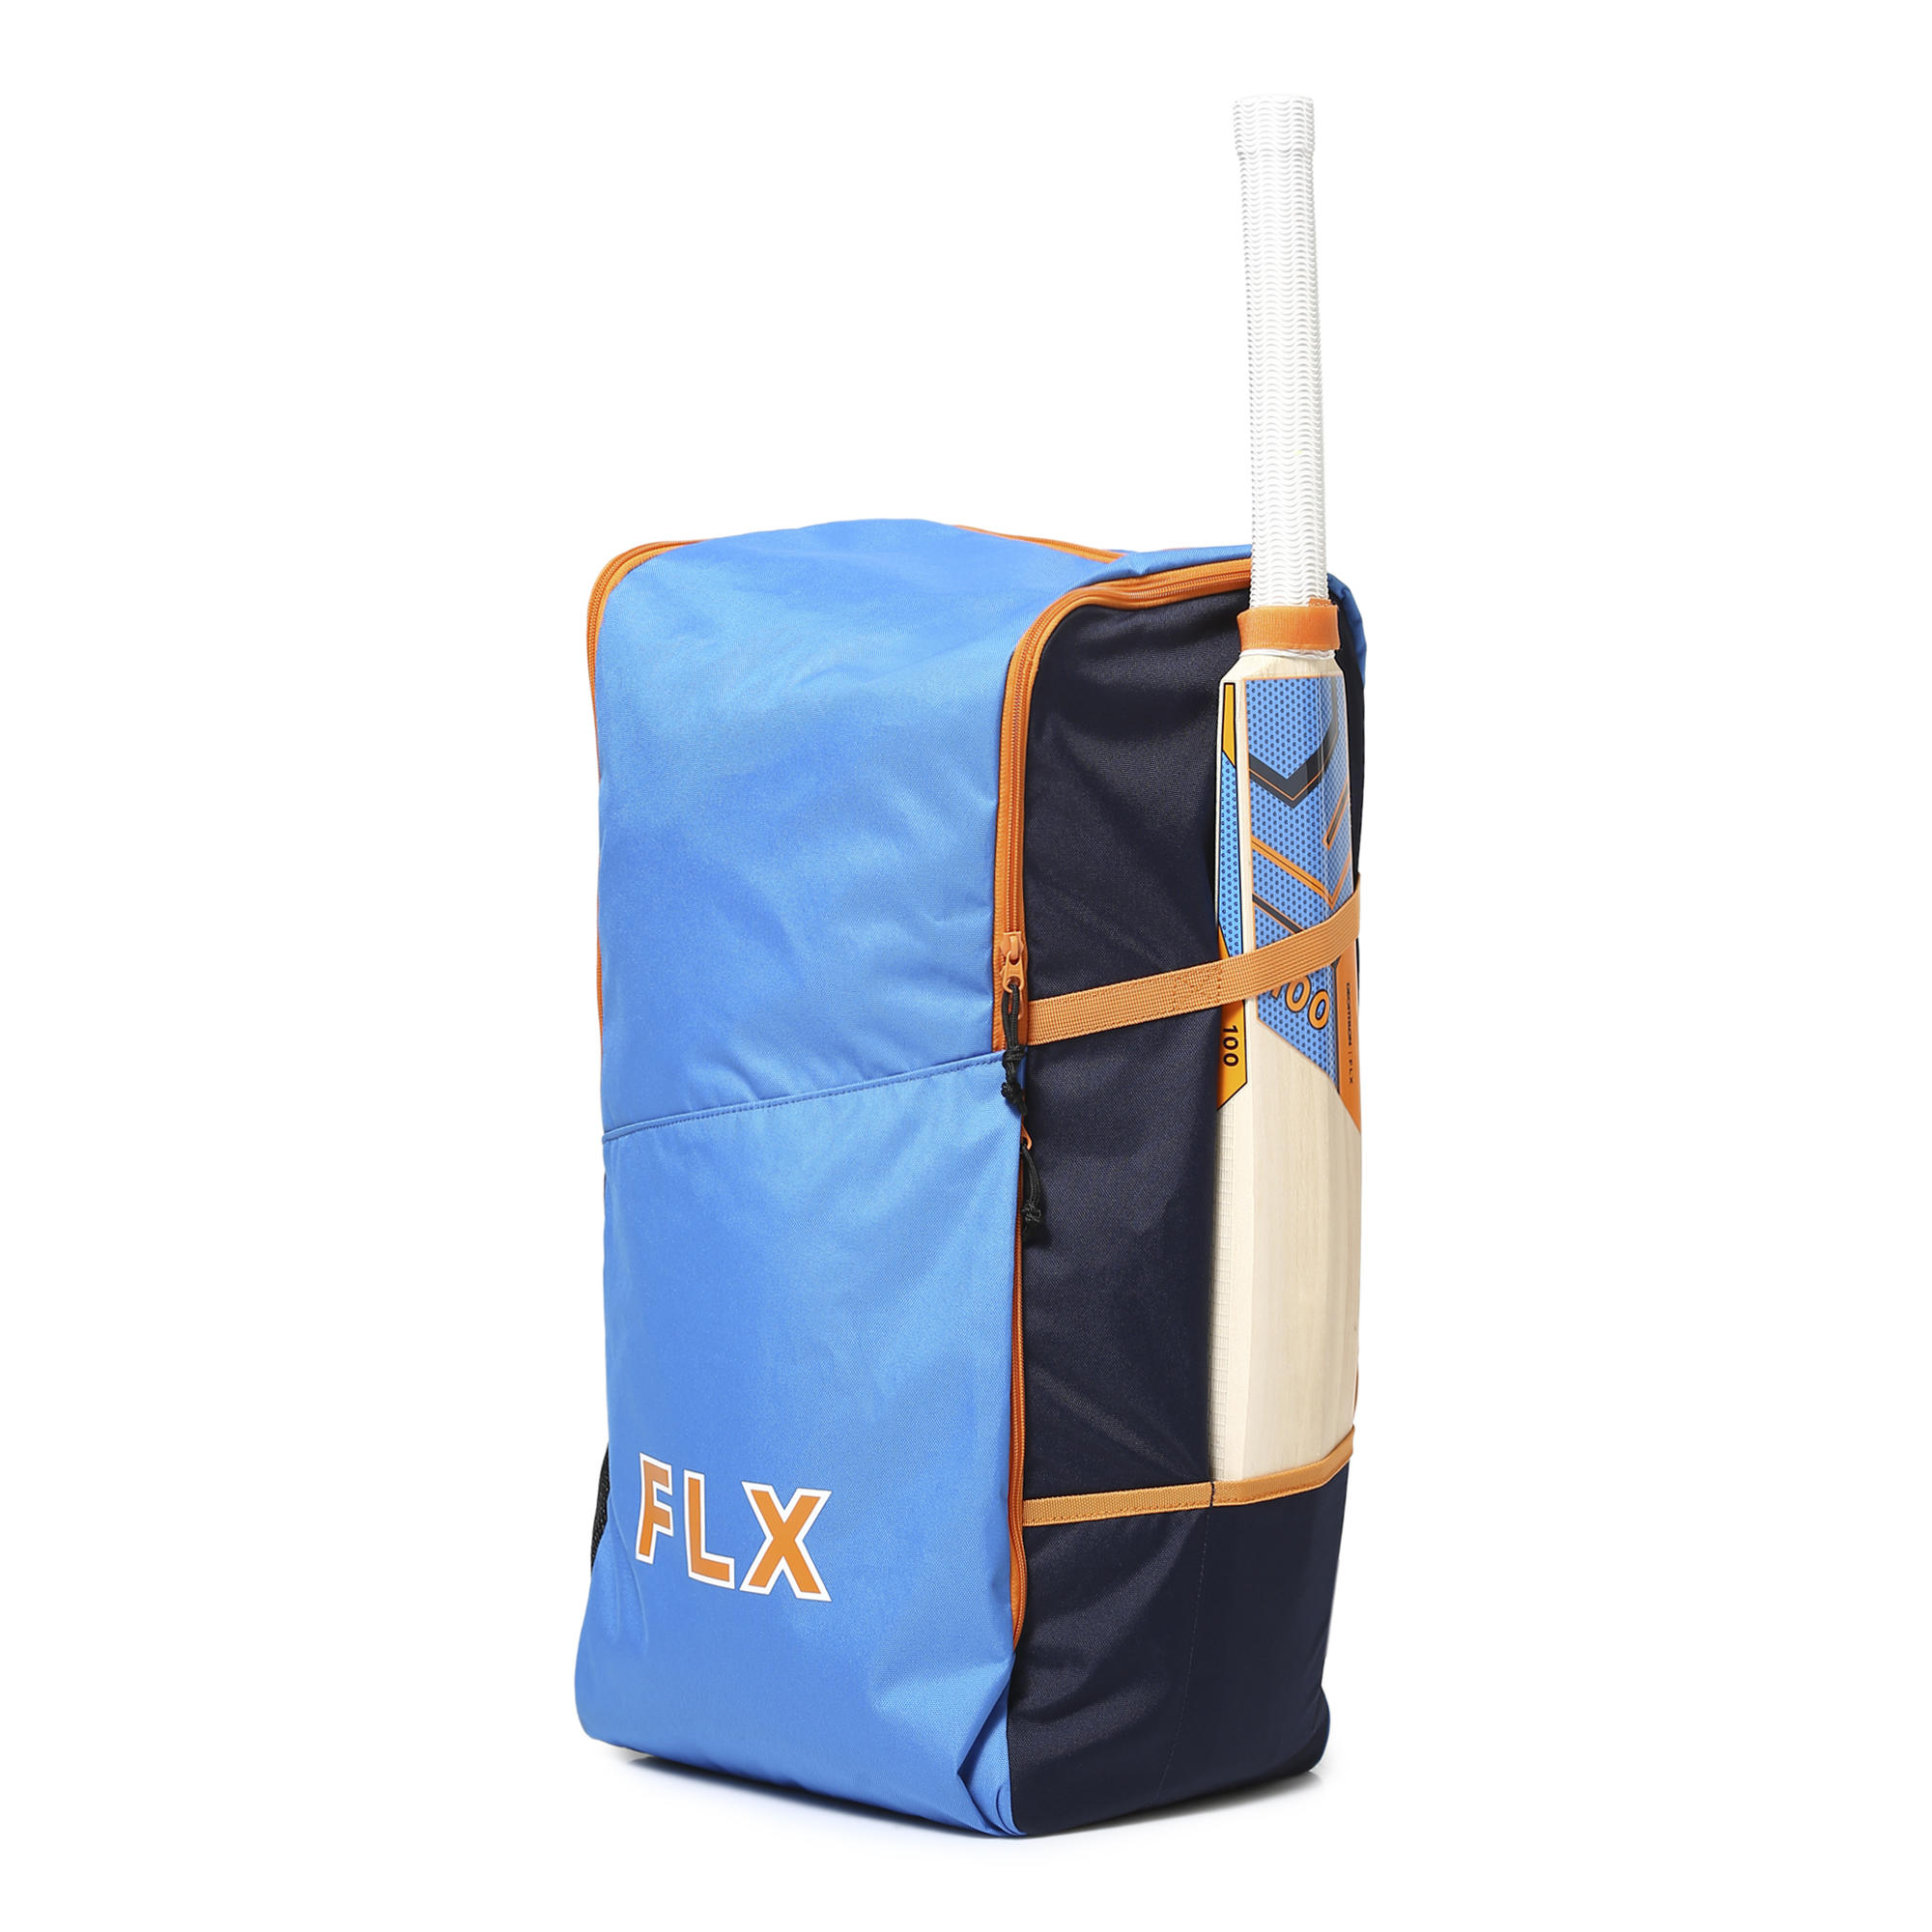 Cricket bags | Slazenger, Kookaburra | Sports Direct